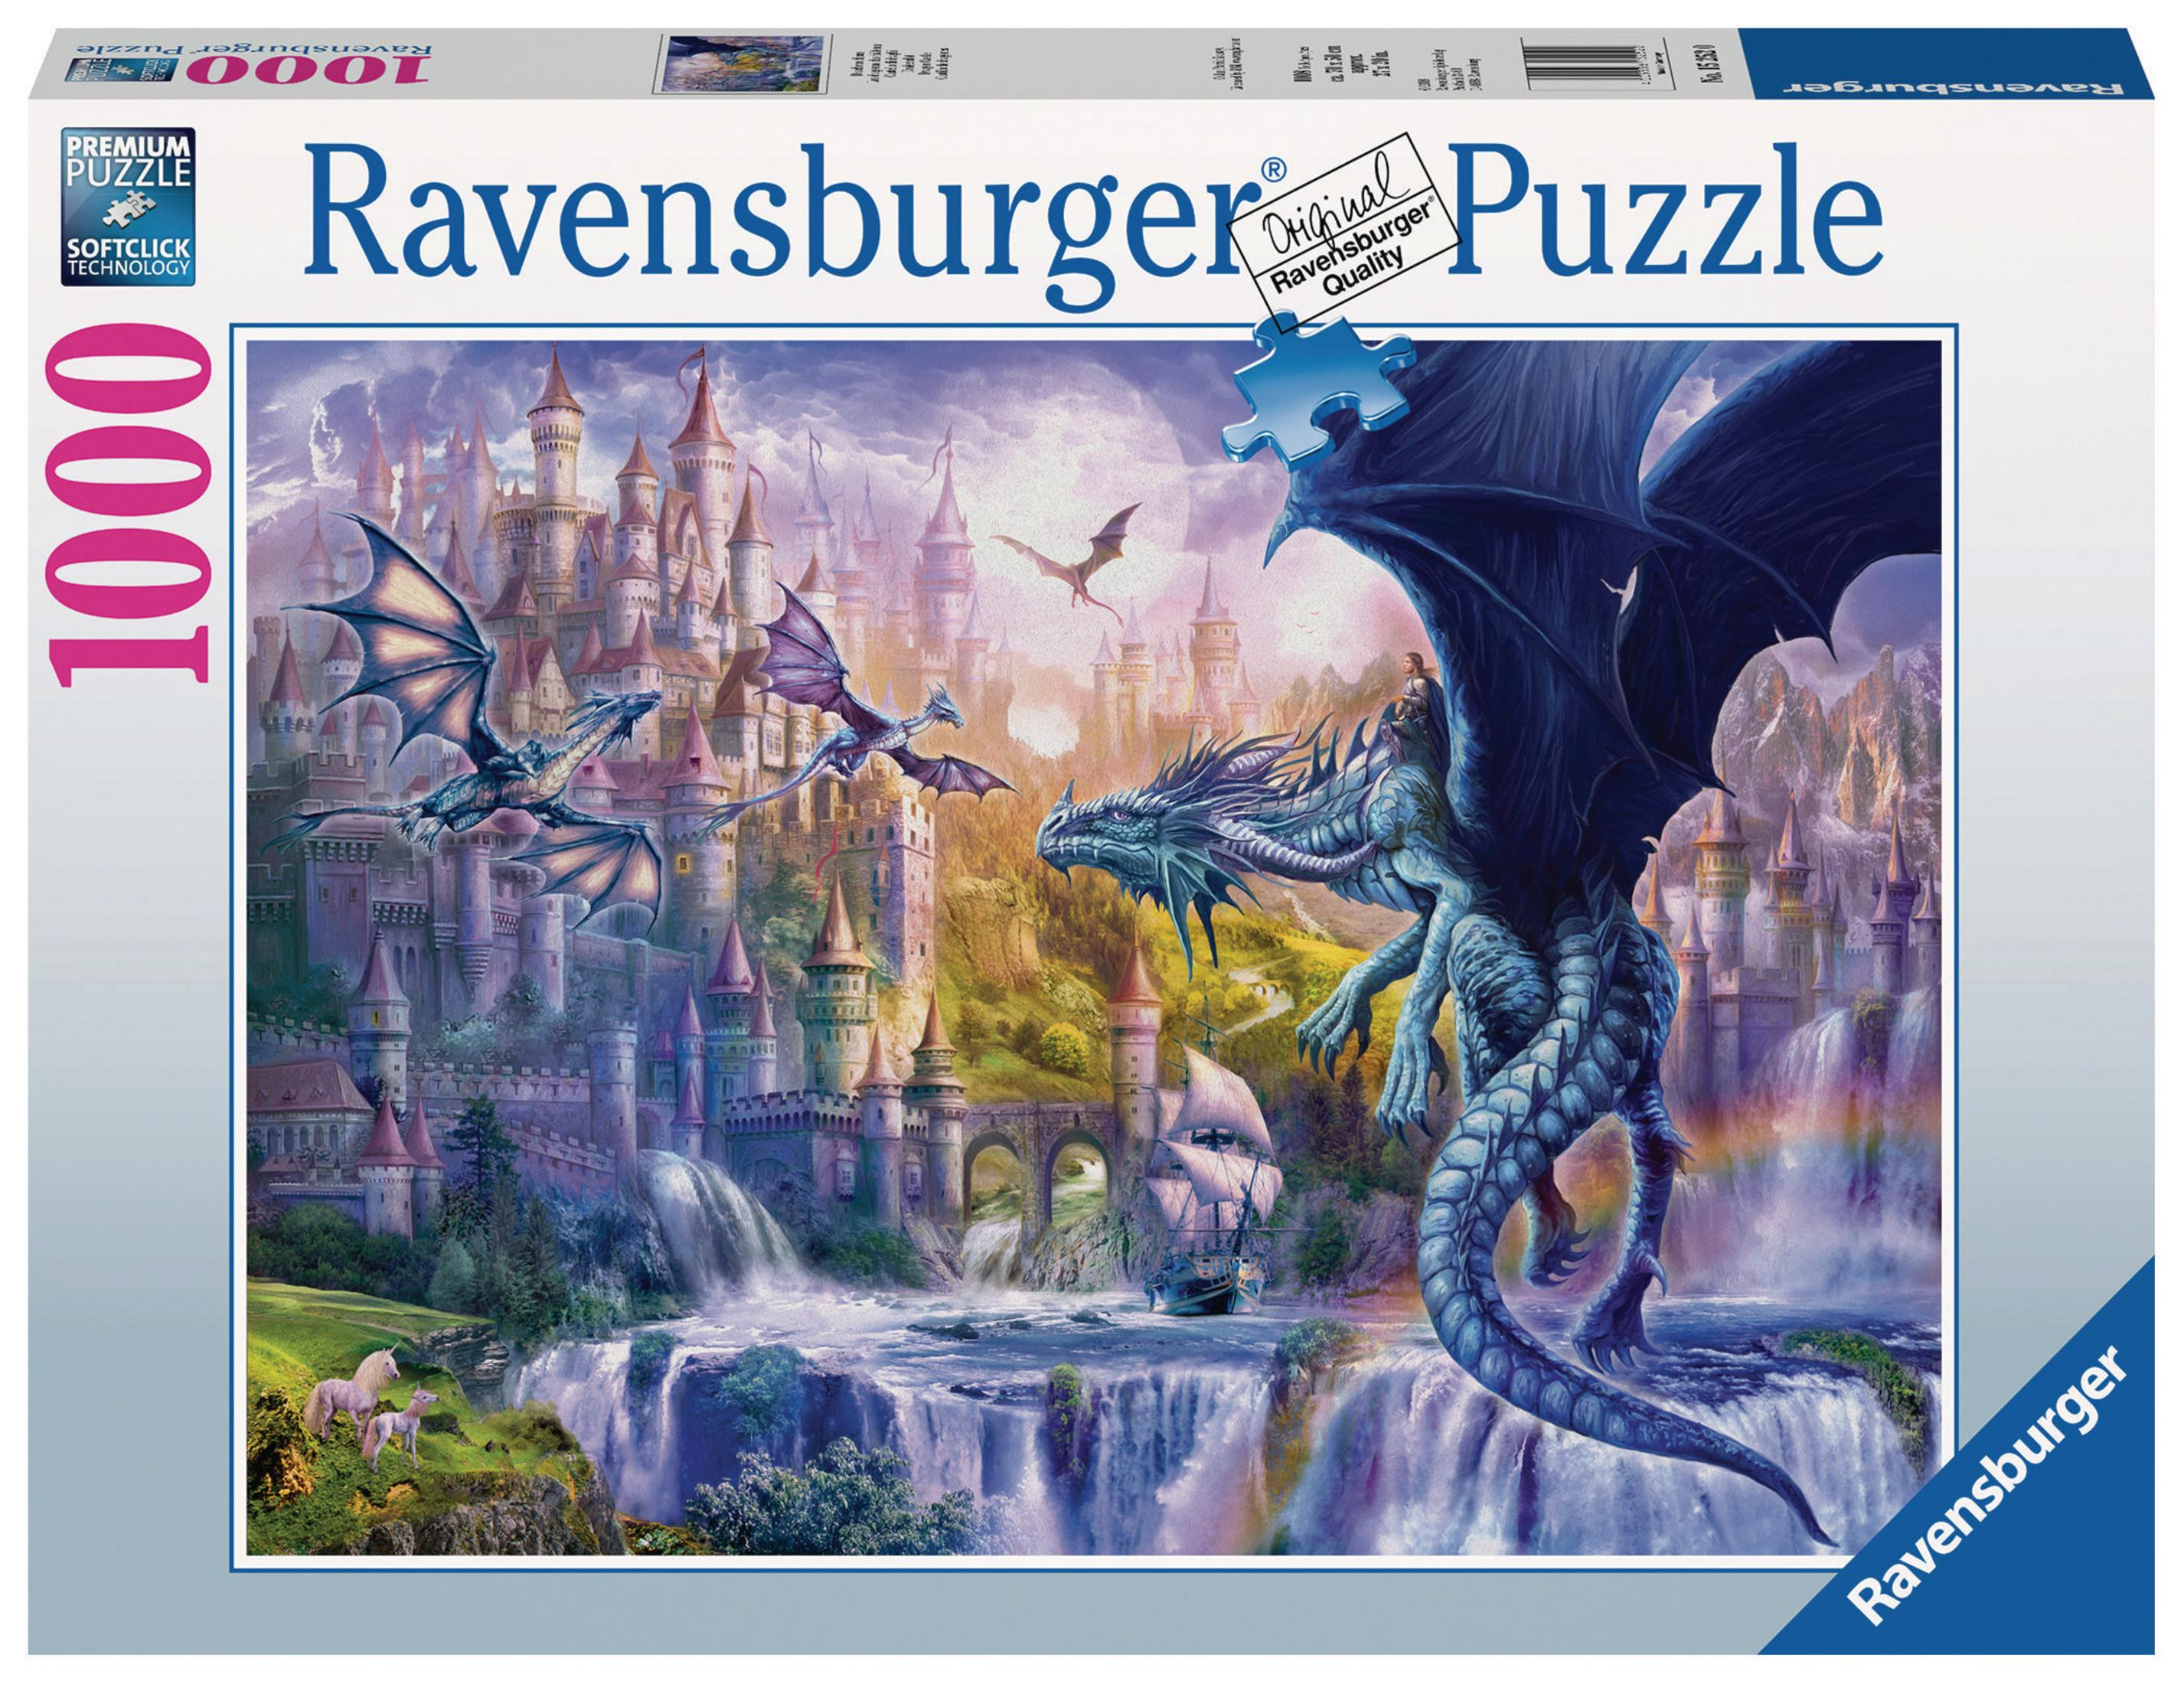 DRACHENSCHLOSS RAVENSBURGER 15252 Puzzle